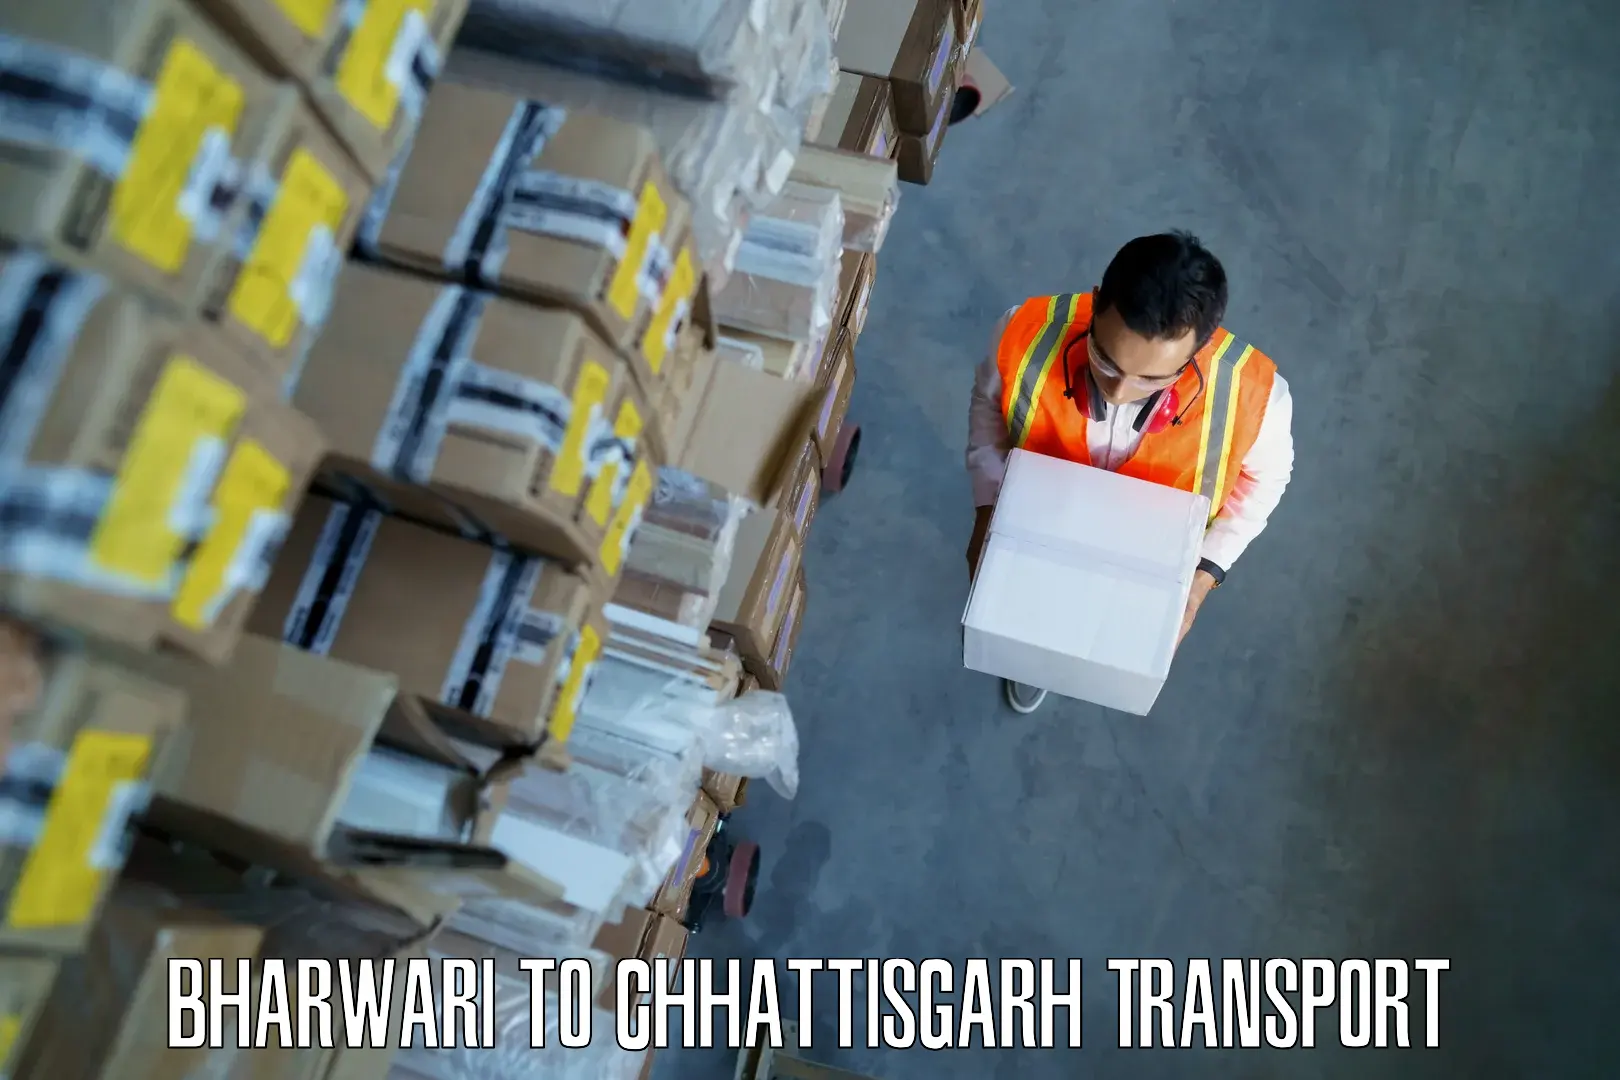 Truck transport companies in India Bharwari to Berla